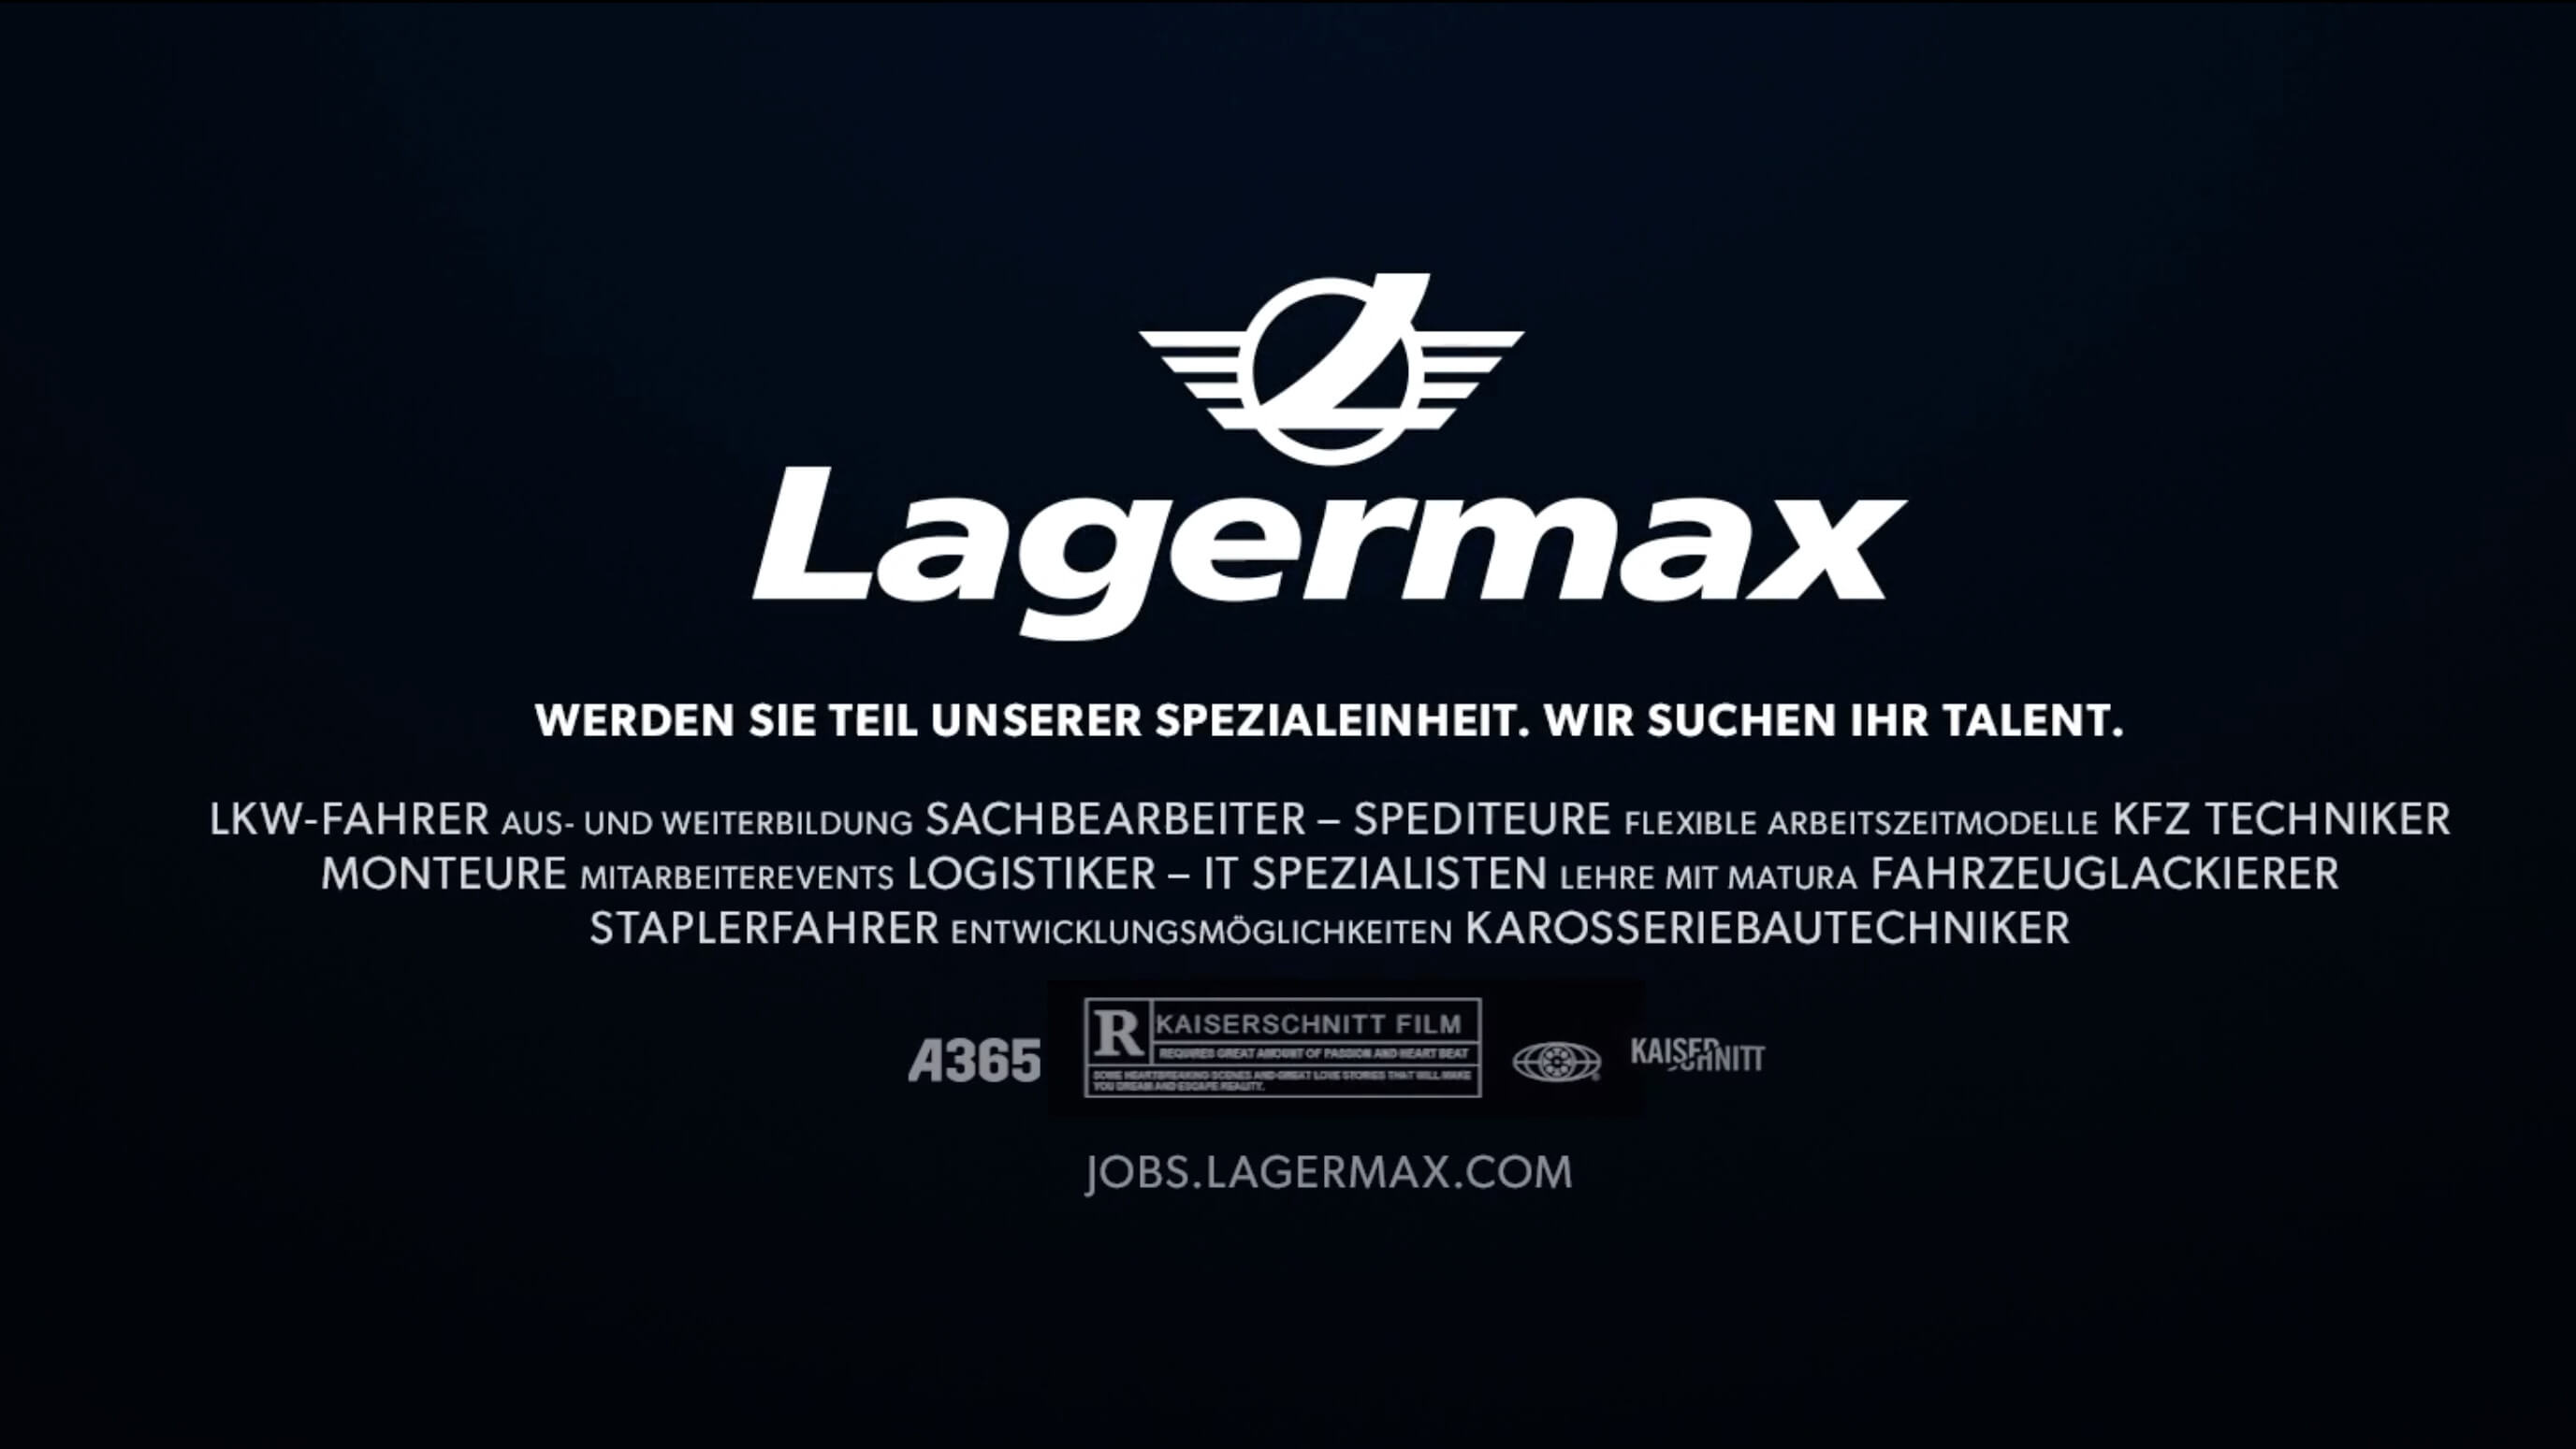 Lagermax Werbung INNENHOFSTUDIOS